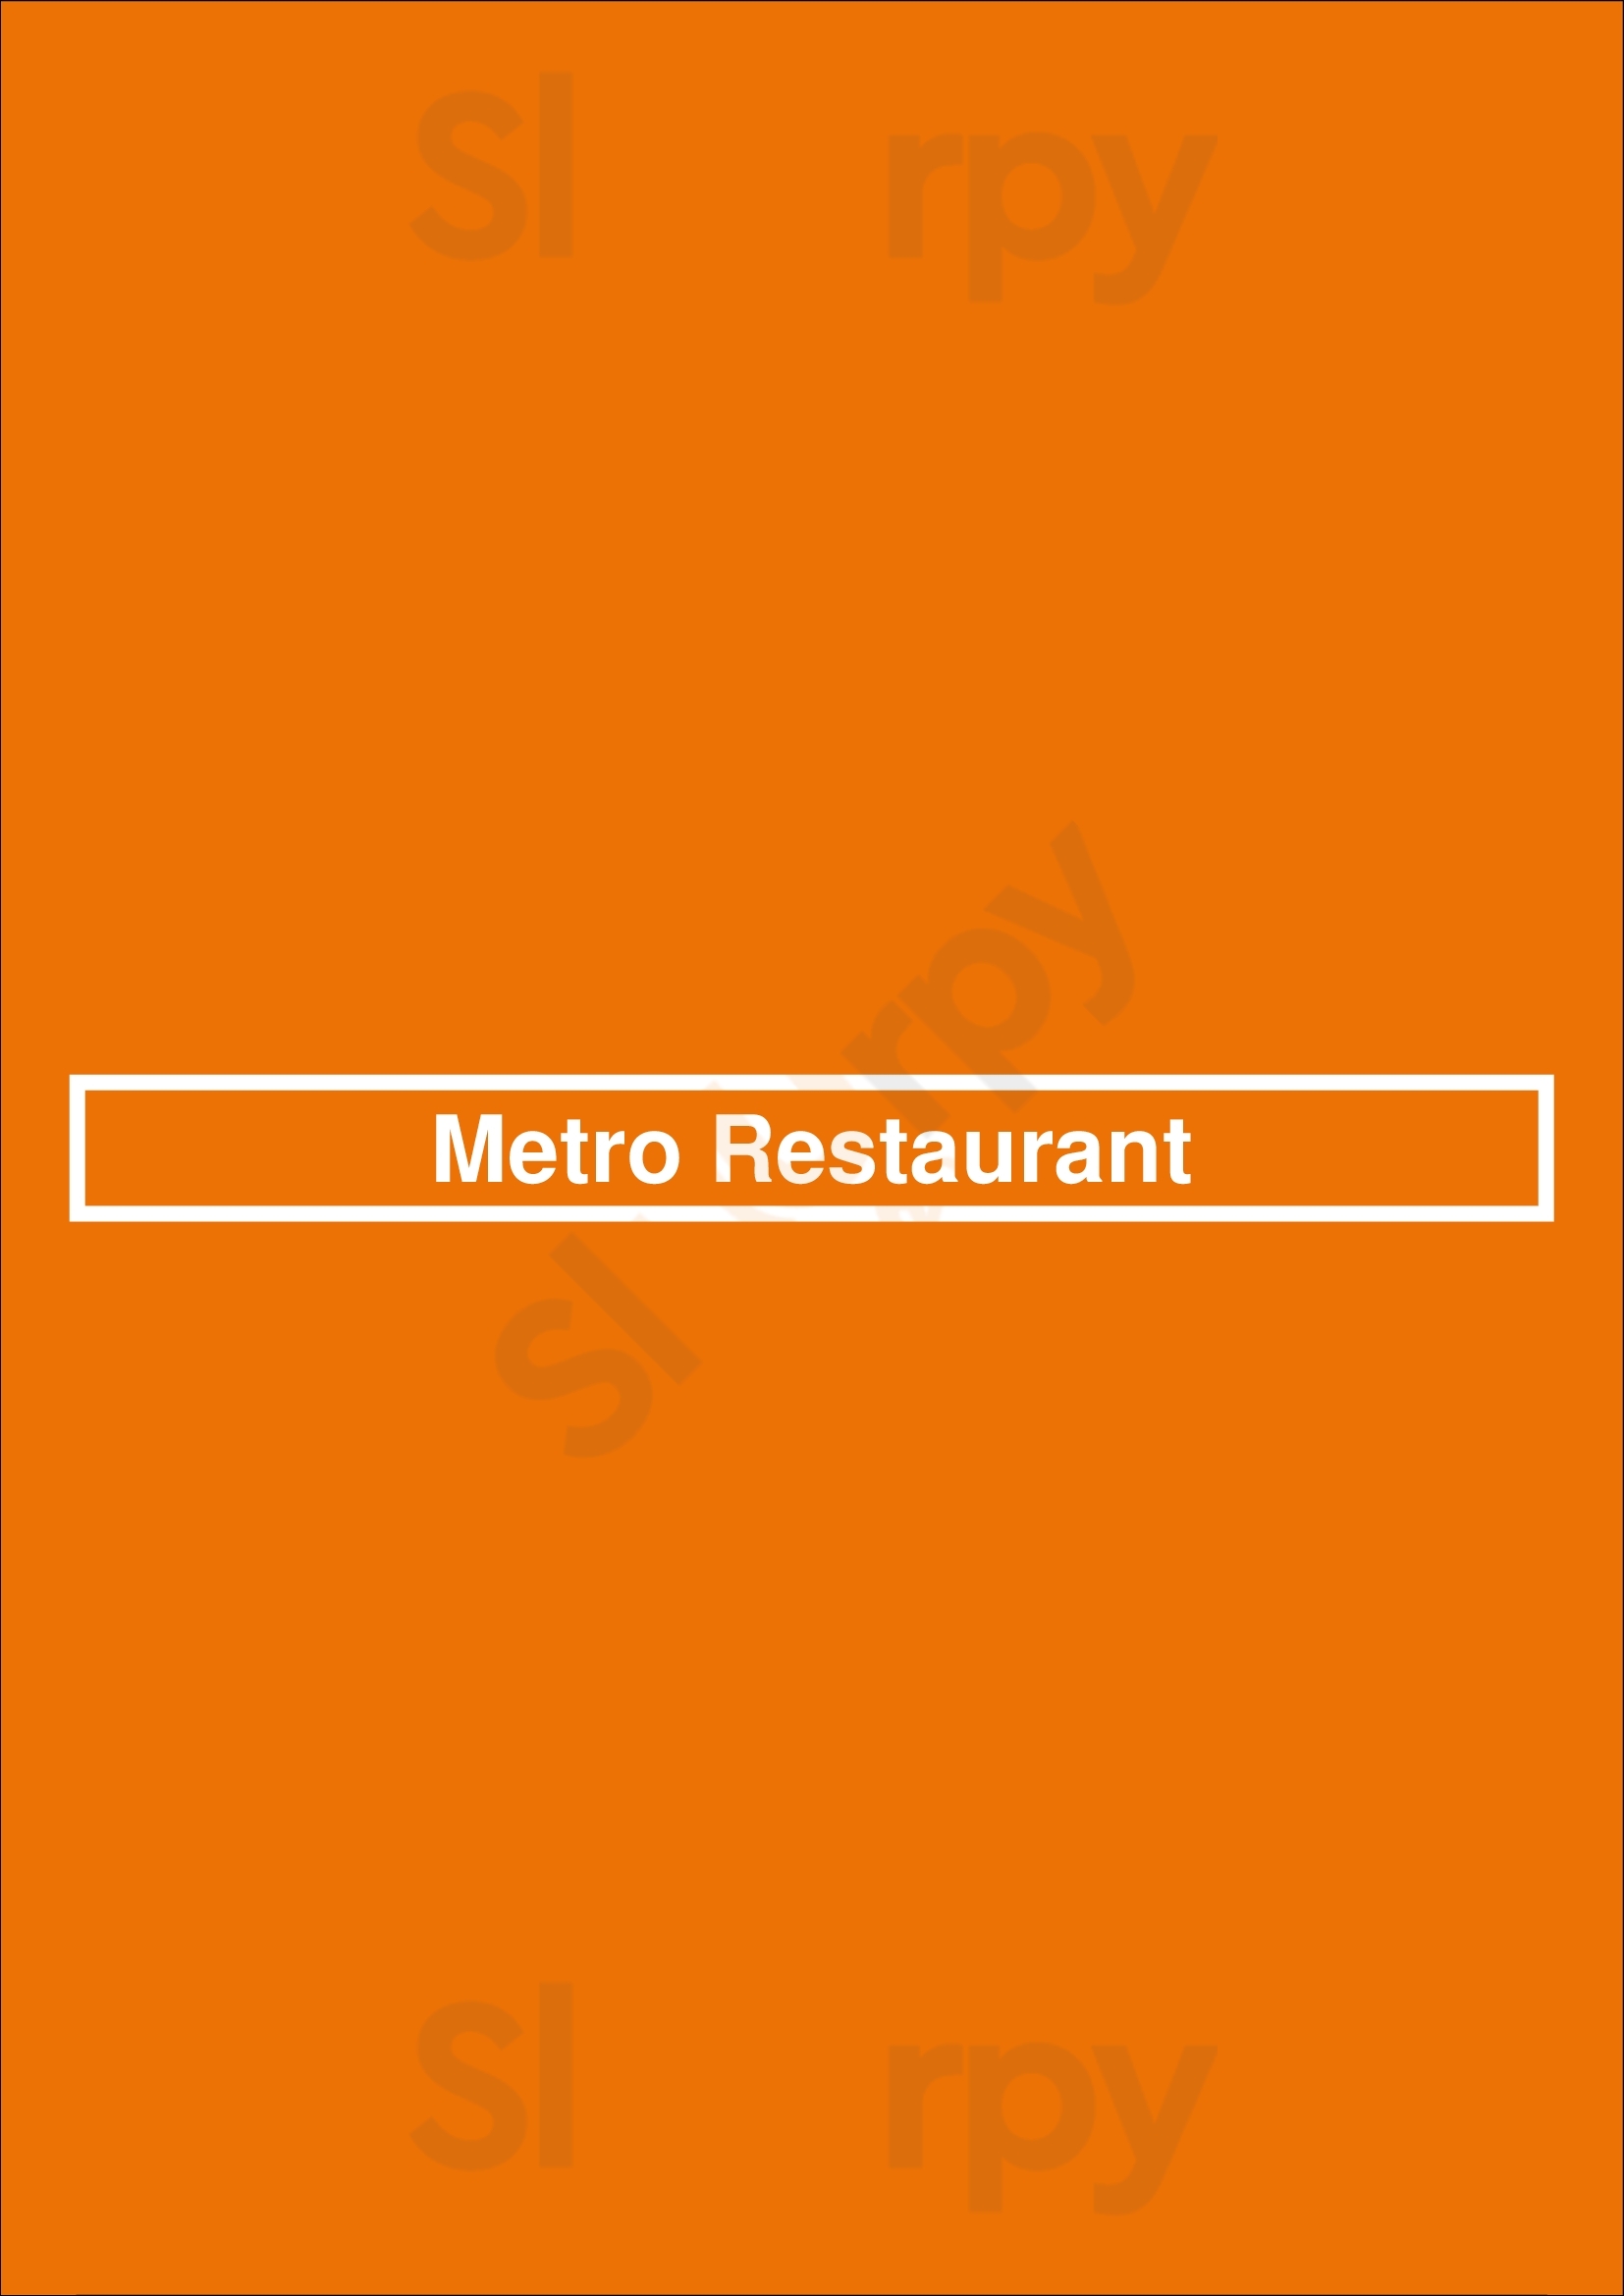 Metro Restaurant Kitchener Menu - 1